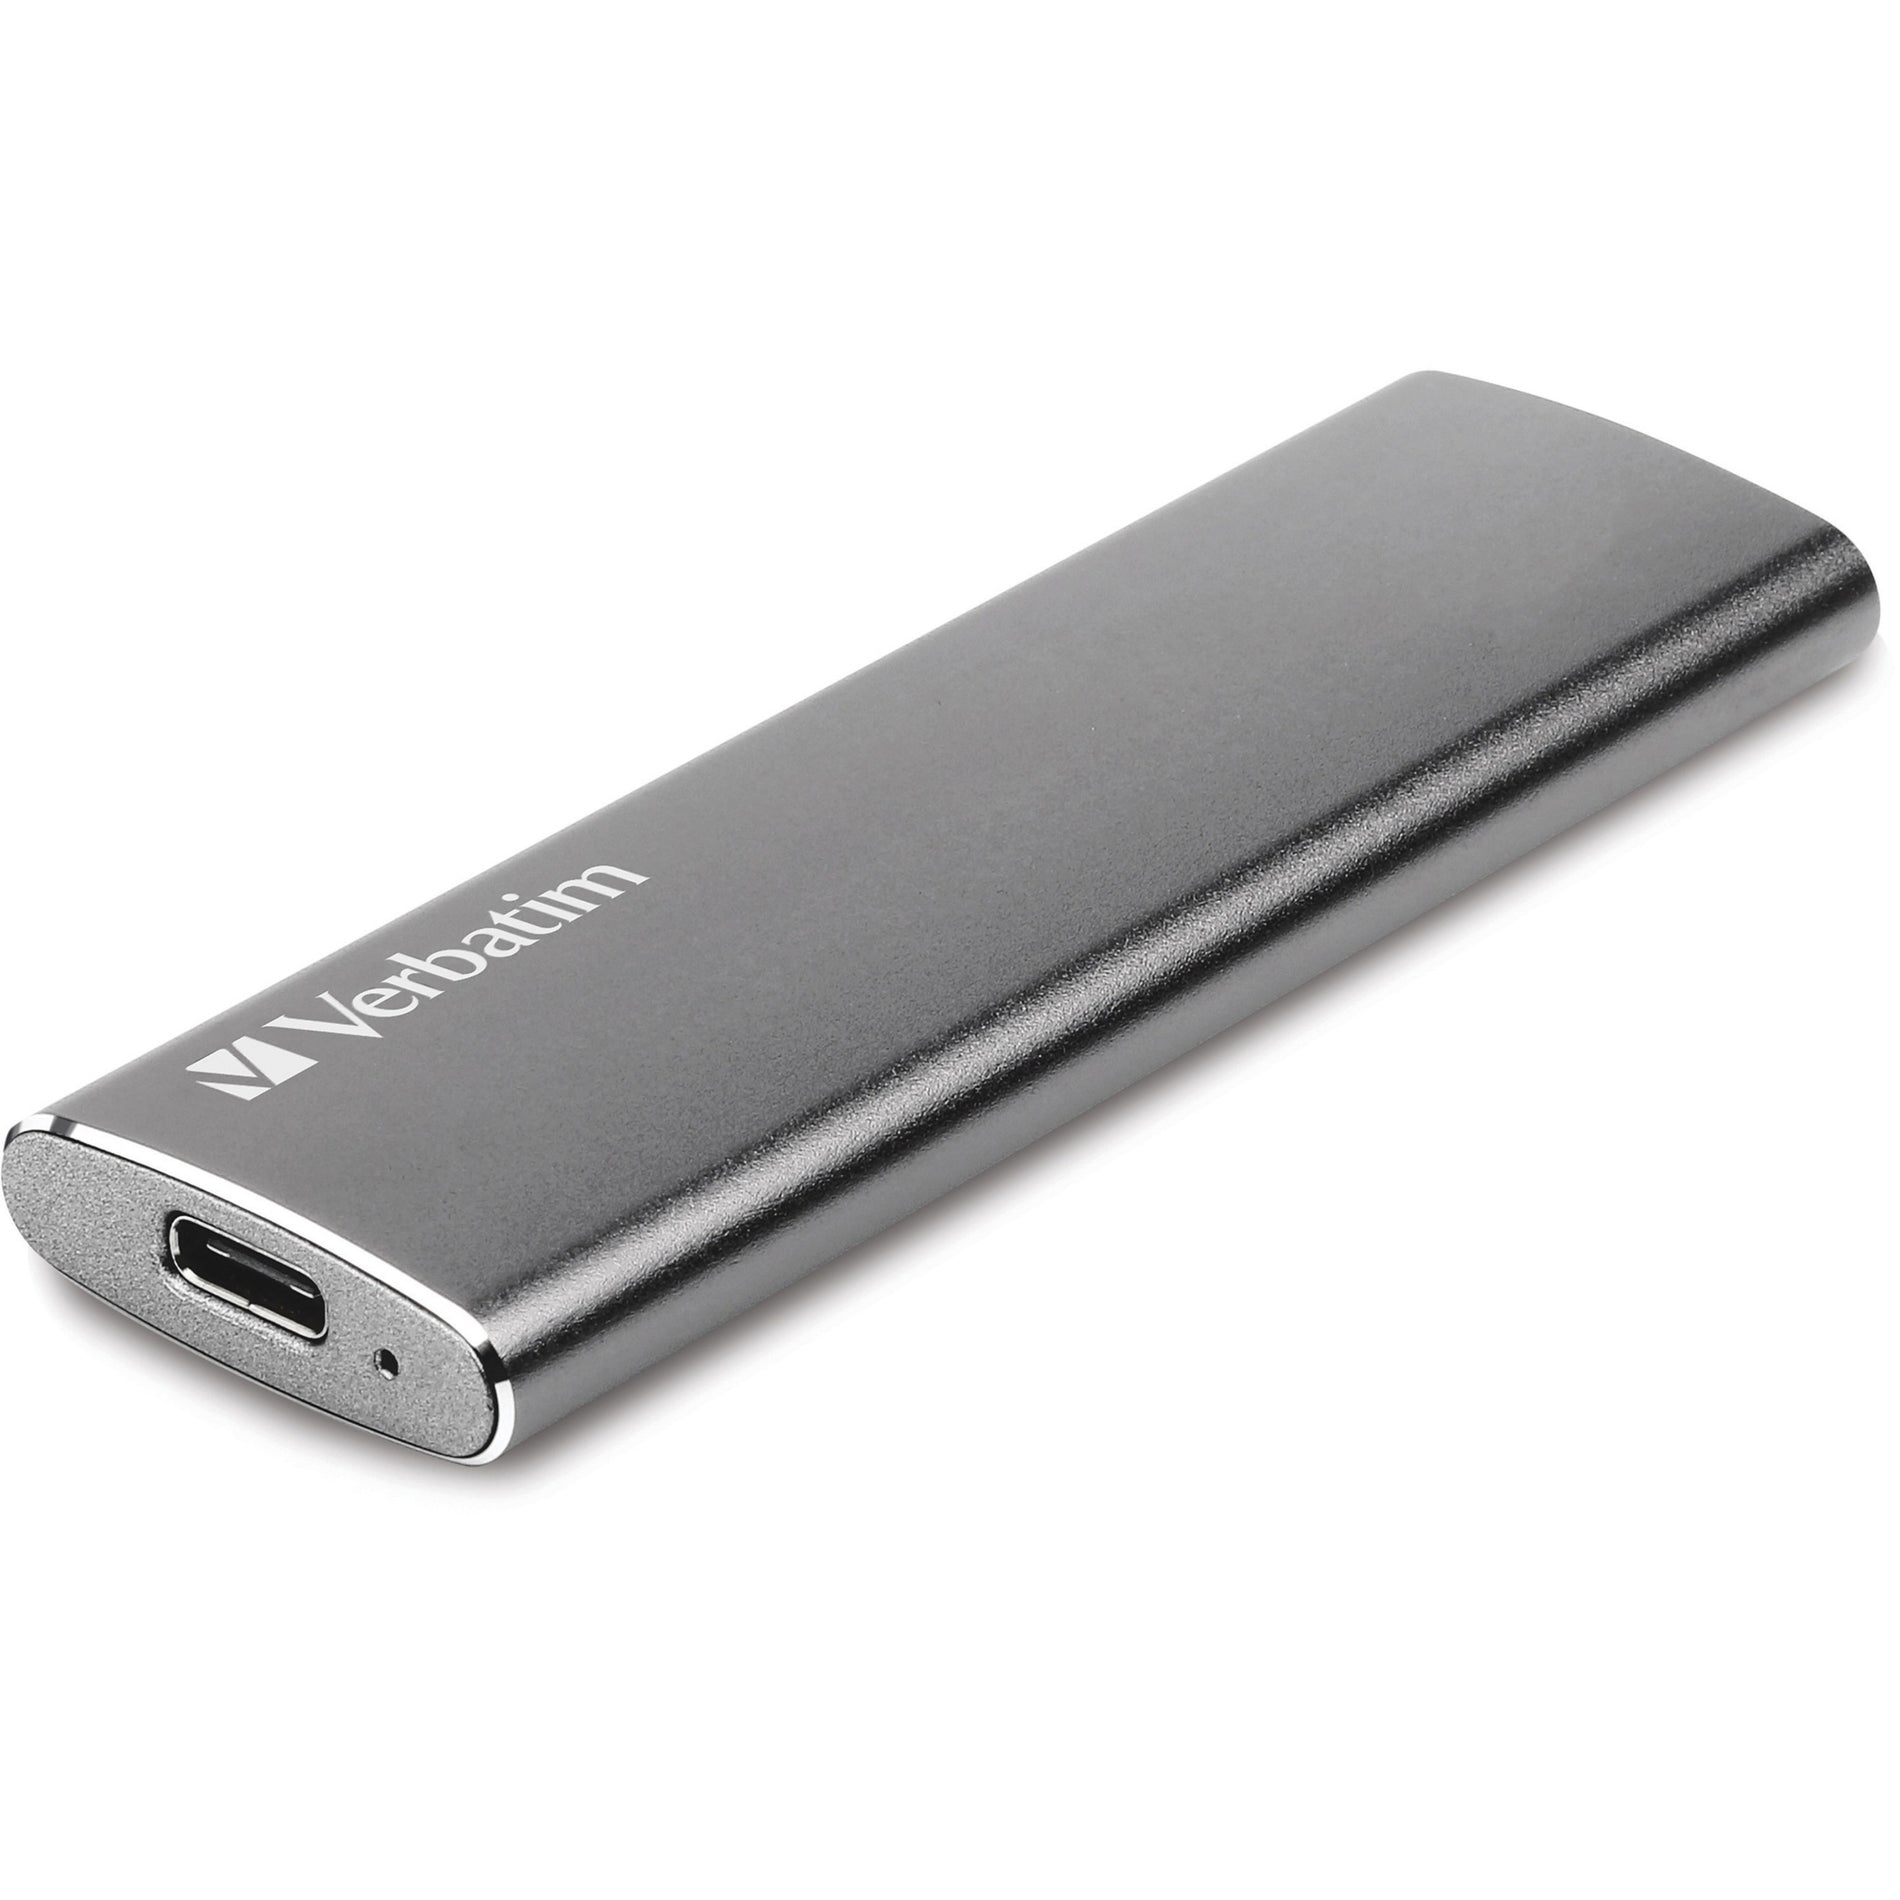 Verbatim 47442 240GB Vx500 External SSD, USB 3.1 Gen 2 - Graphite, Fast Data Transfer, Portable Storage